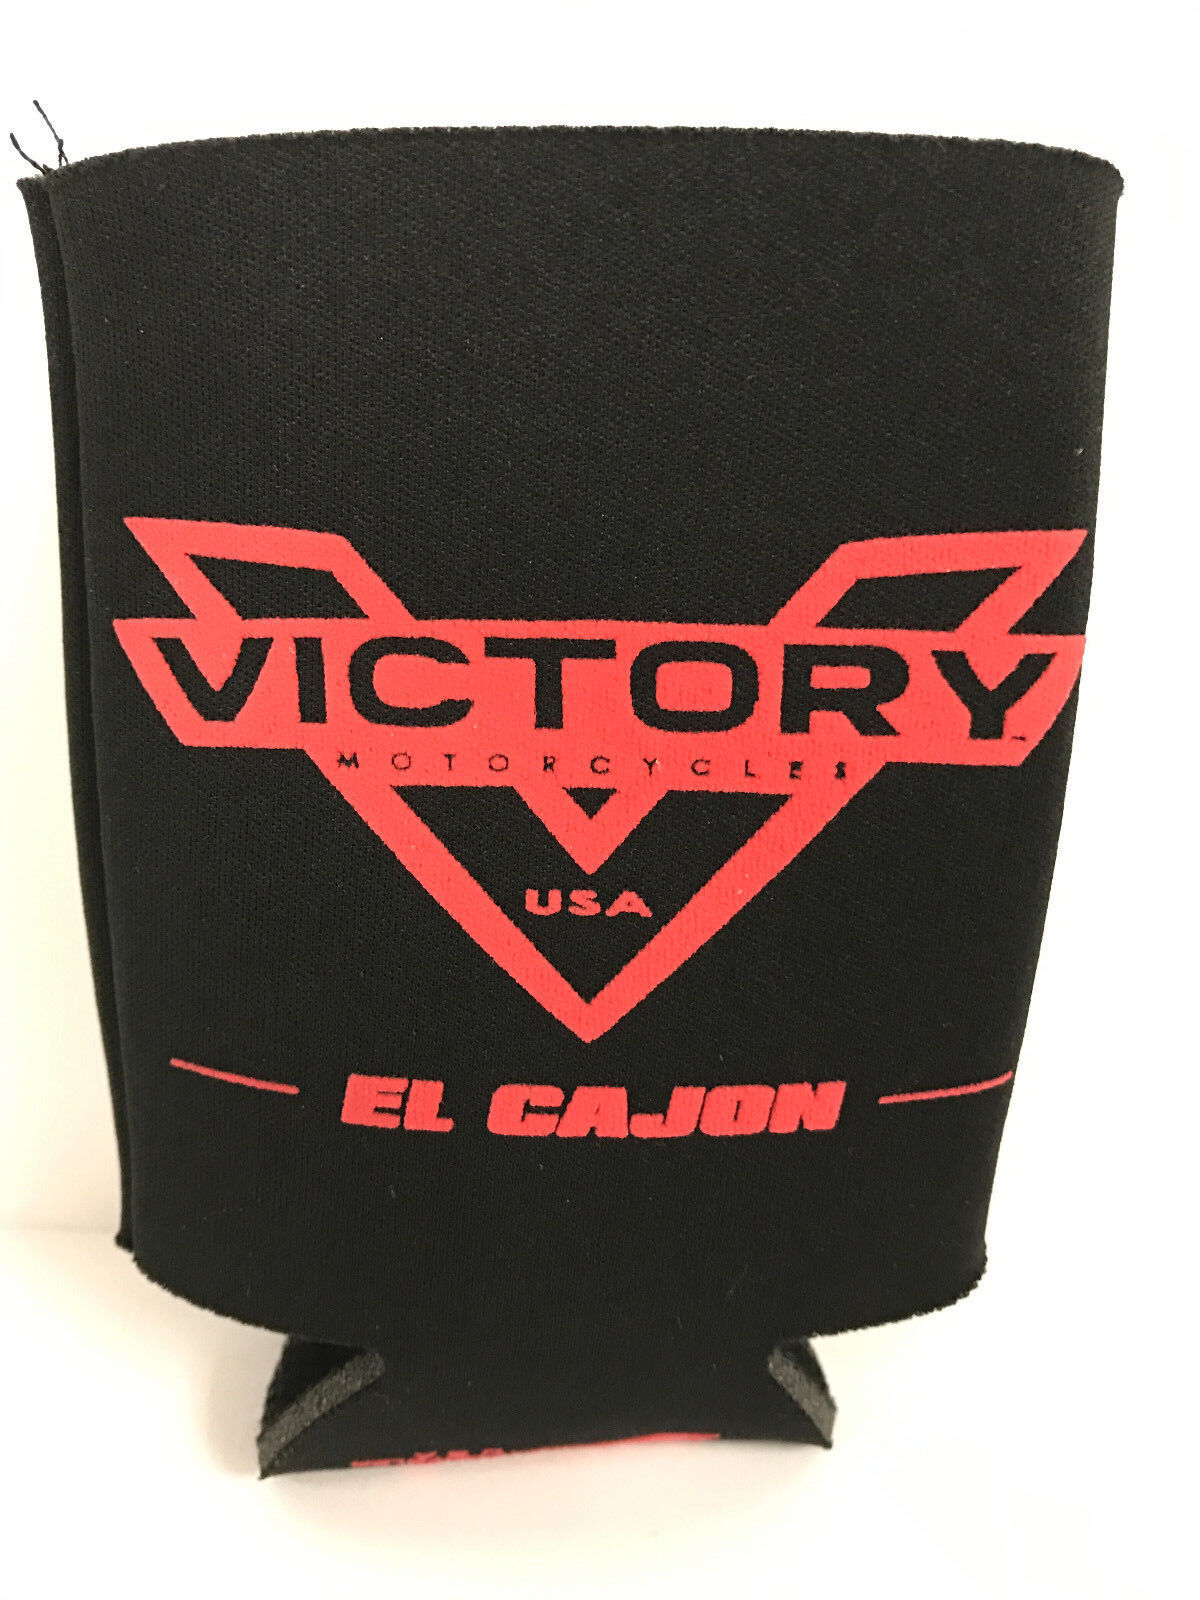 VICTORY MOTORCYCLES OF EL CAJON RED V LOGO KOOZIE BEVERAGE BEER SODA COOZIE USA